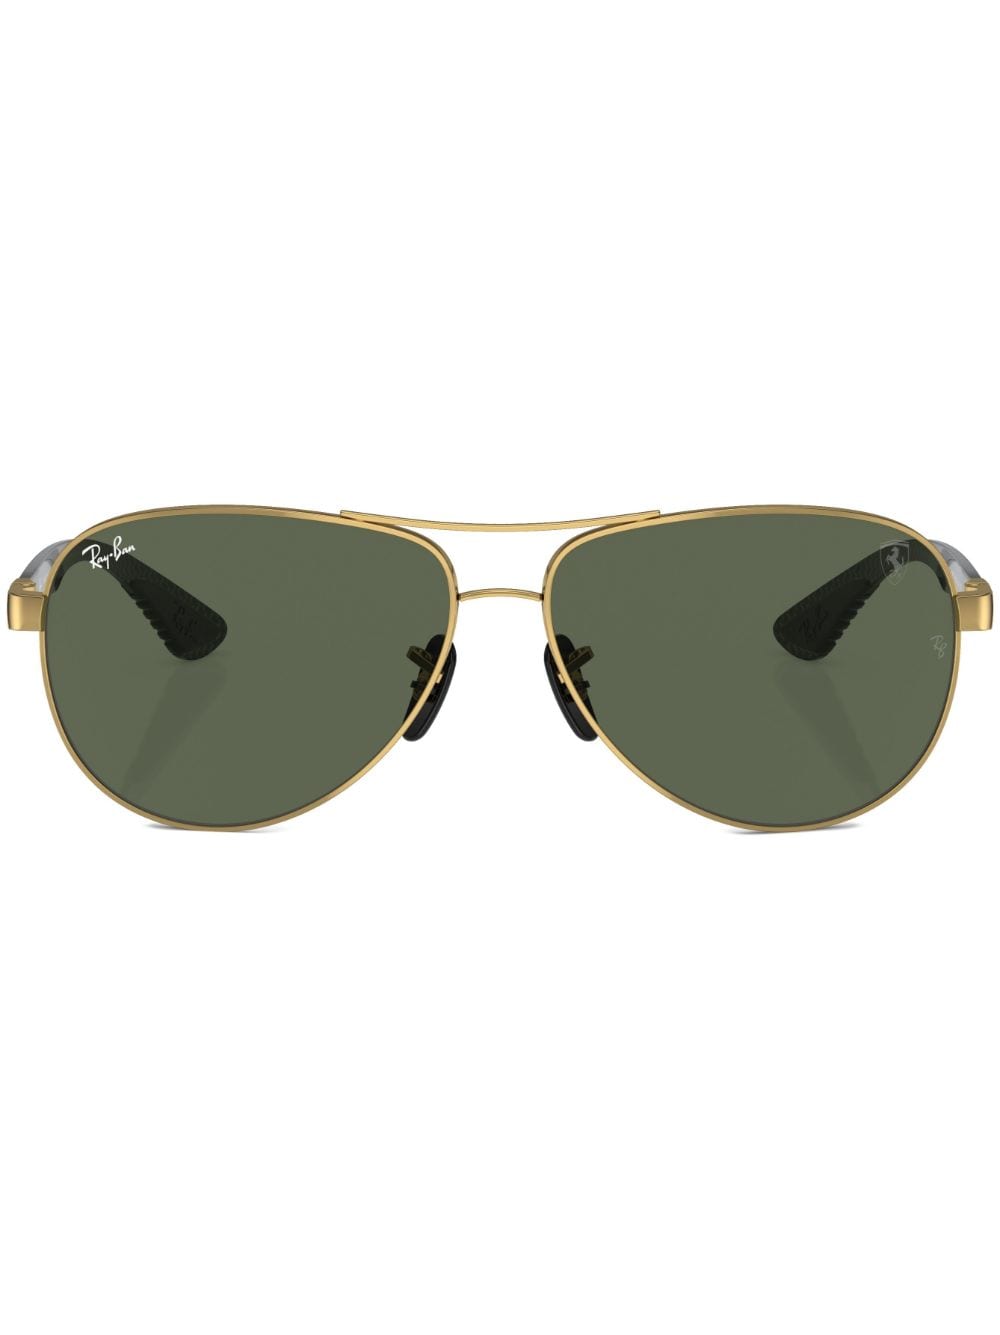 Ray Ban Tinted-lenses Pilot-frame Sunglasses In Gold | ModeSens